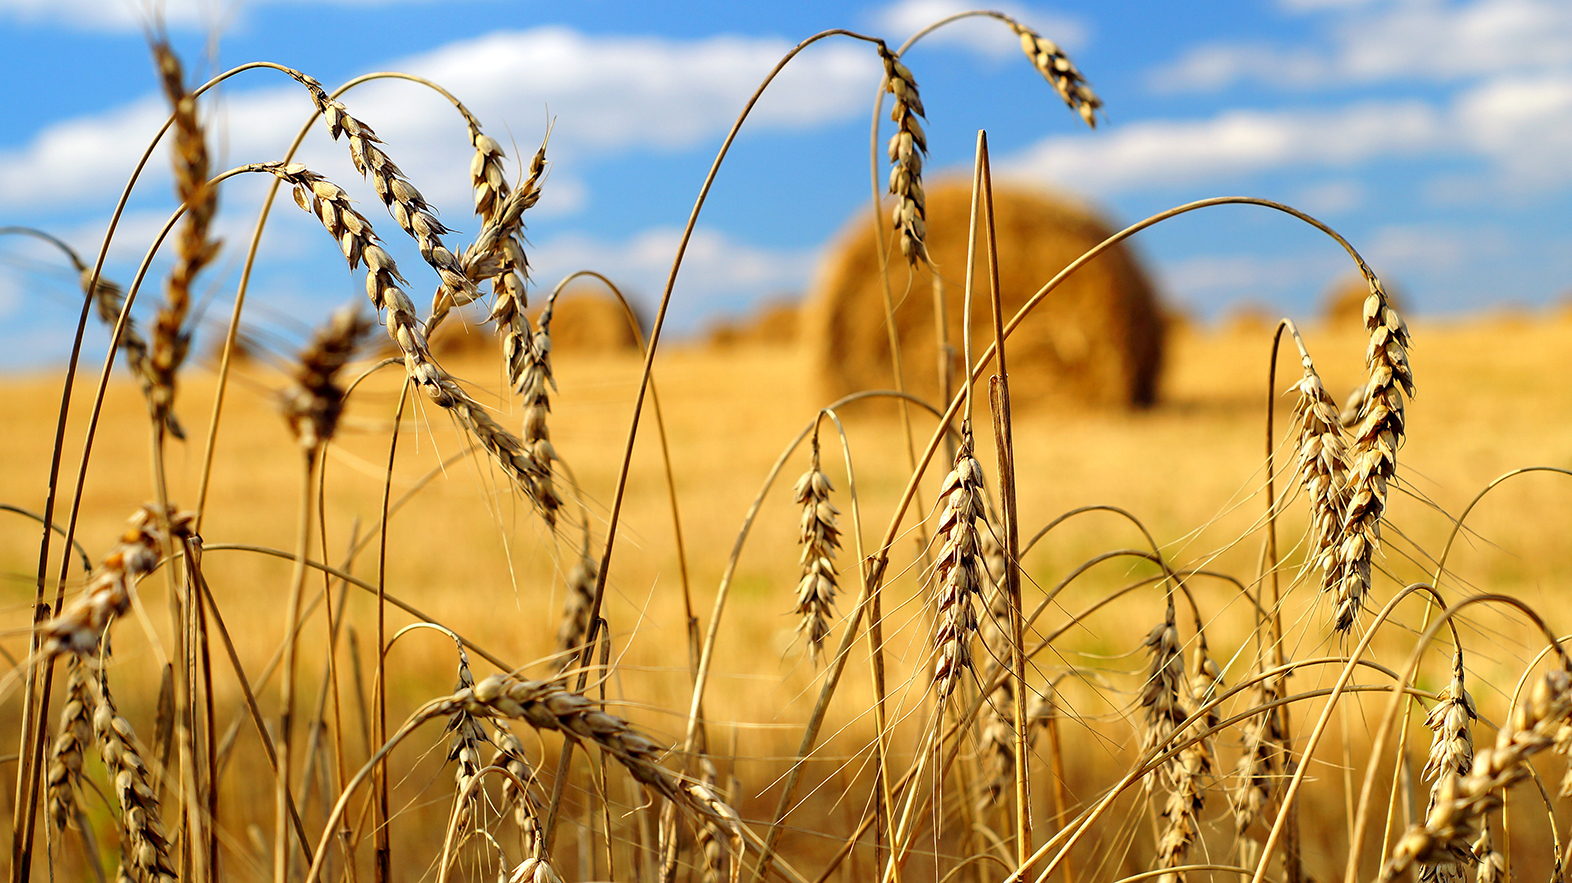 Golden wheat under a blue sky: an archetypal American scene.